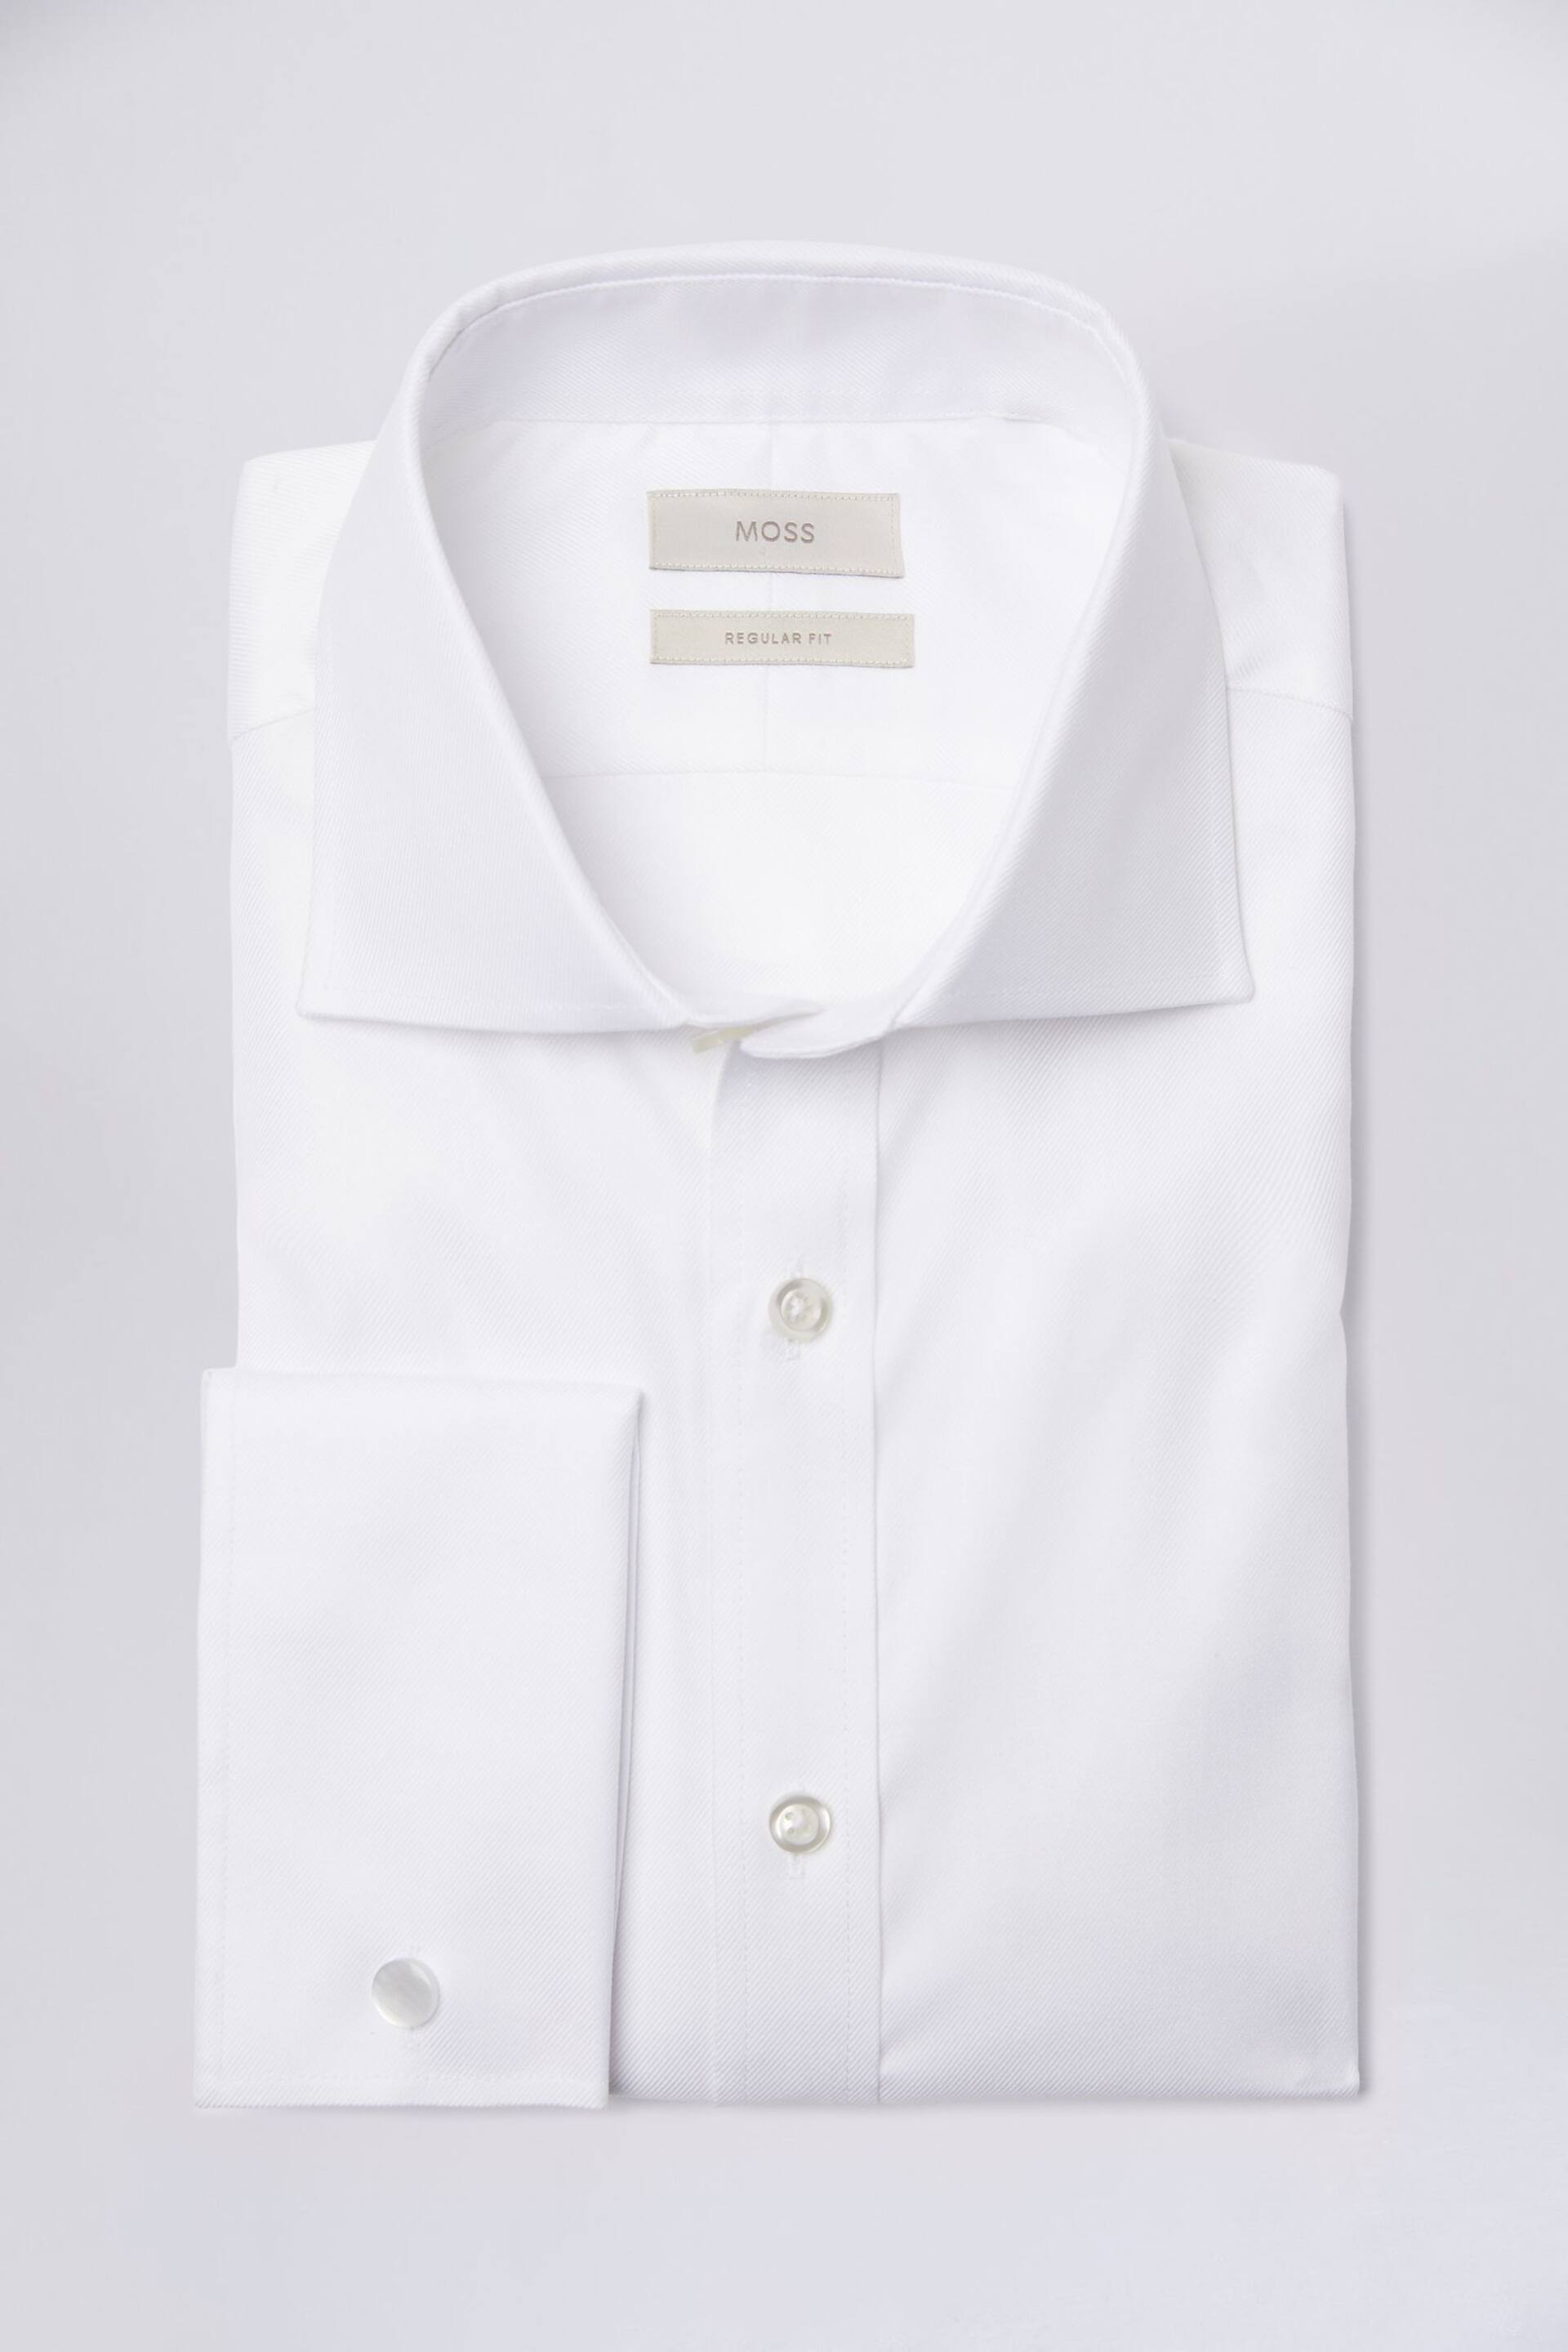 MOSS White Double Cuff Twill Shirt - Image 4 of 4